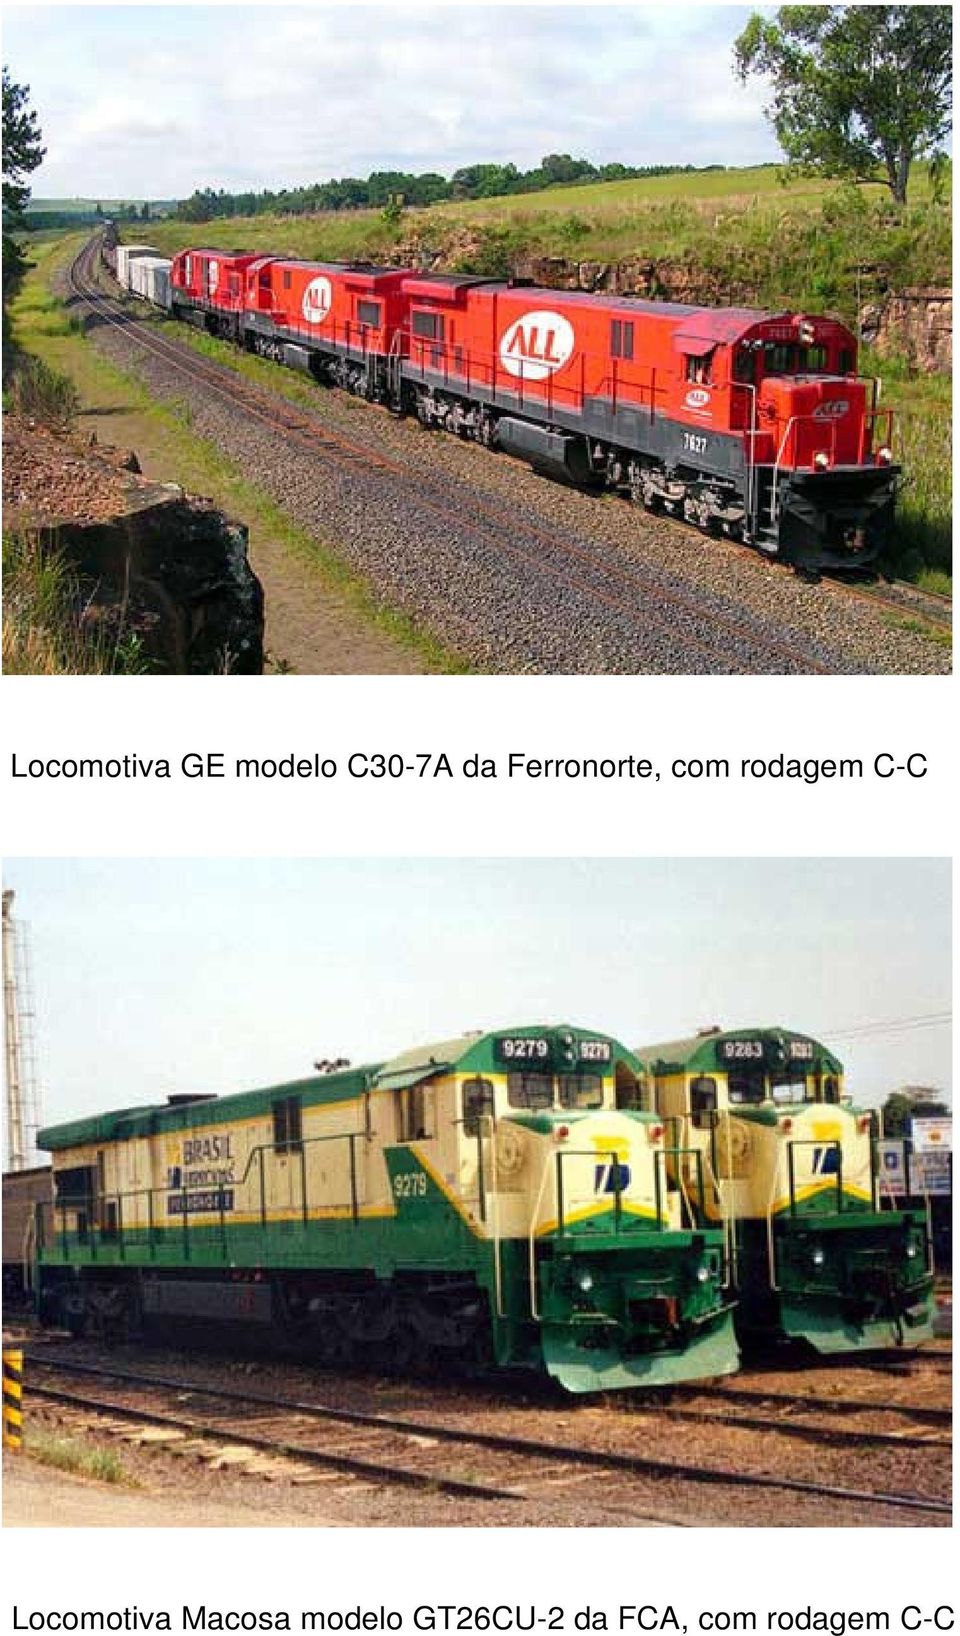 C-C Locomotiva Macosa modelo